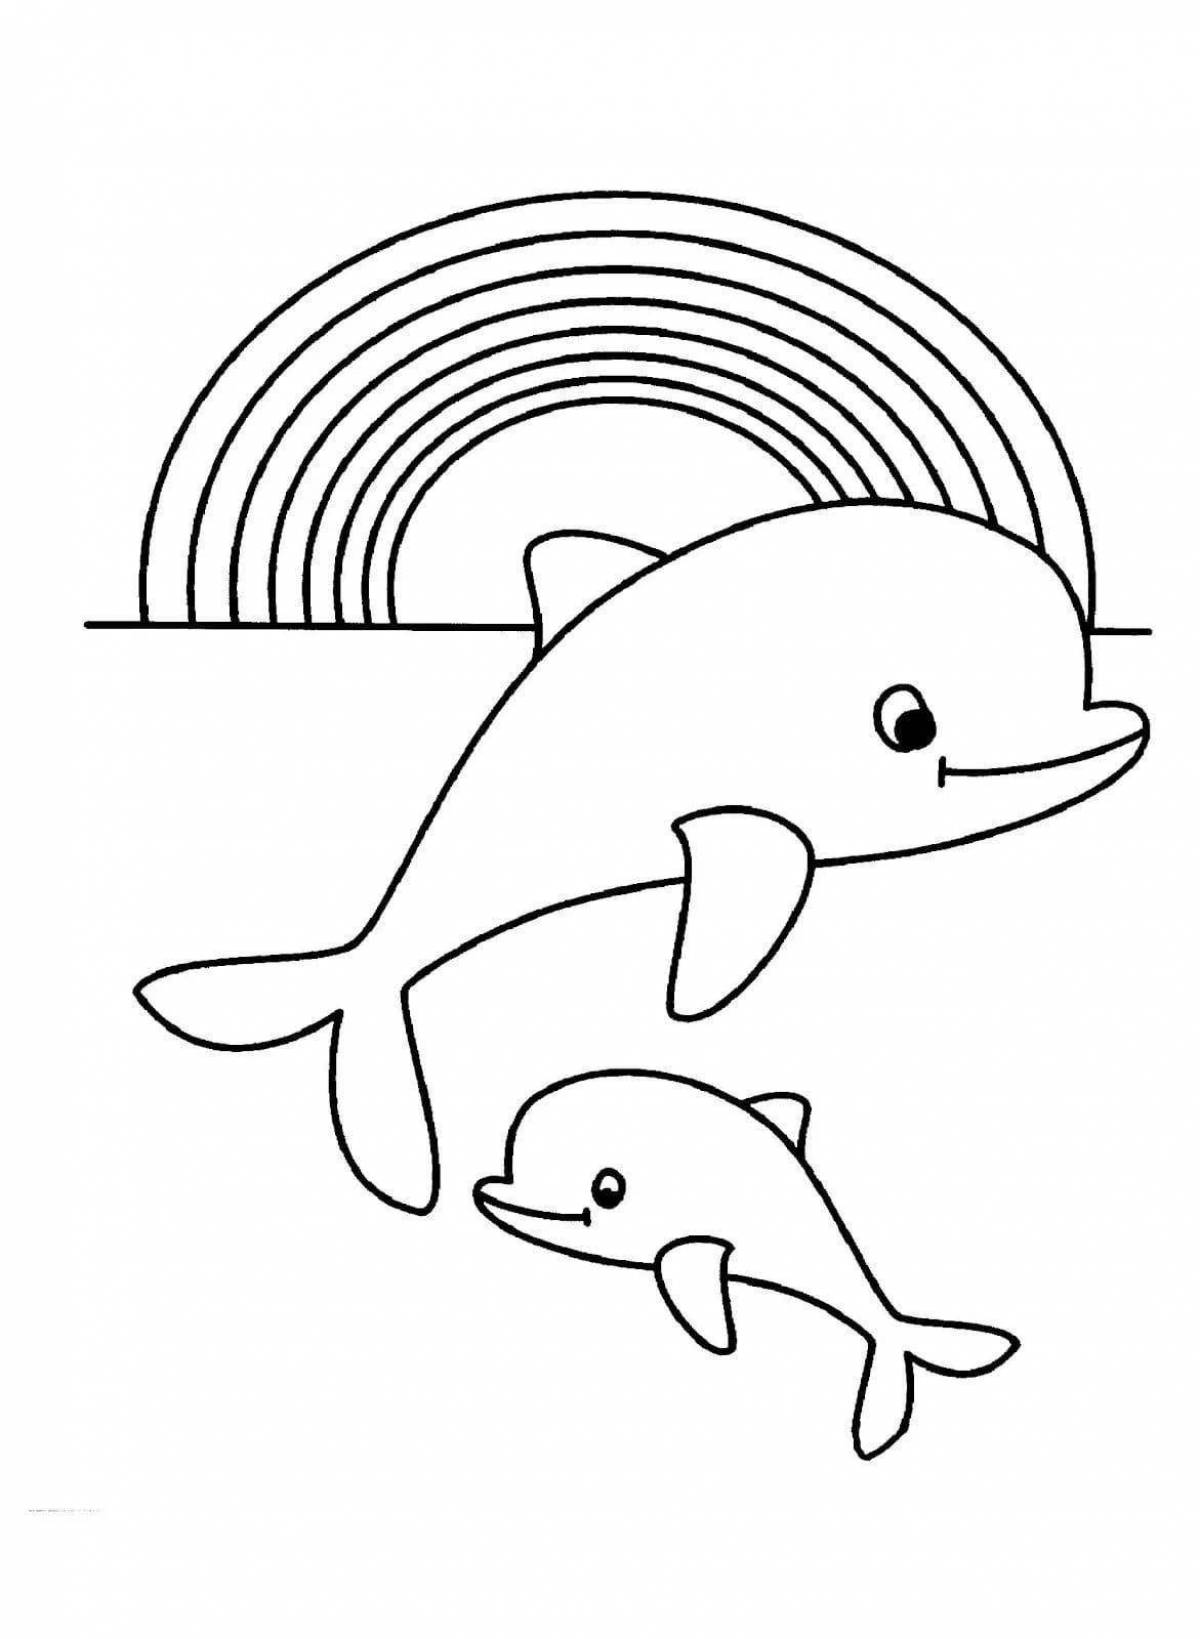 Dolphin #1